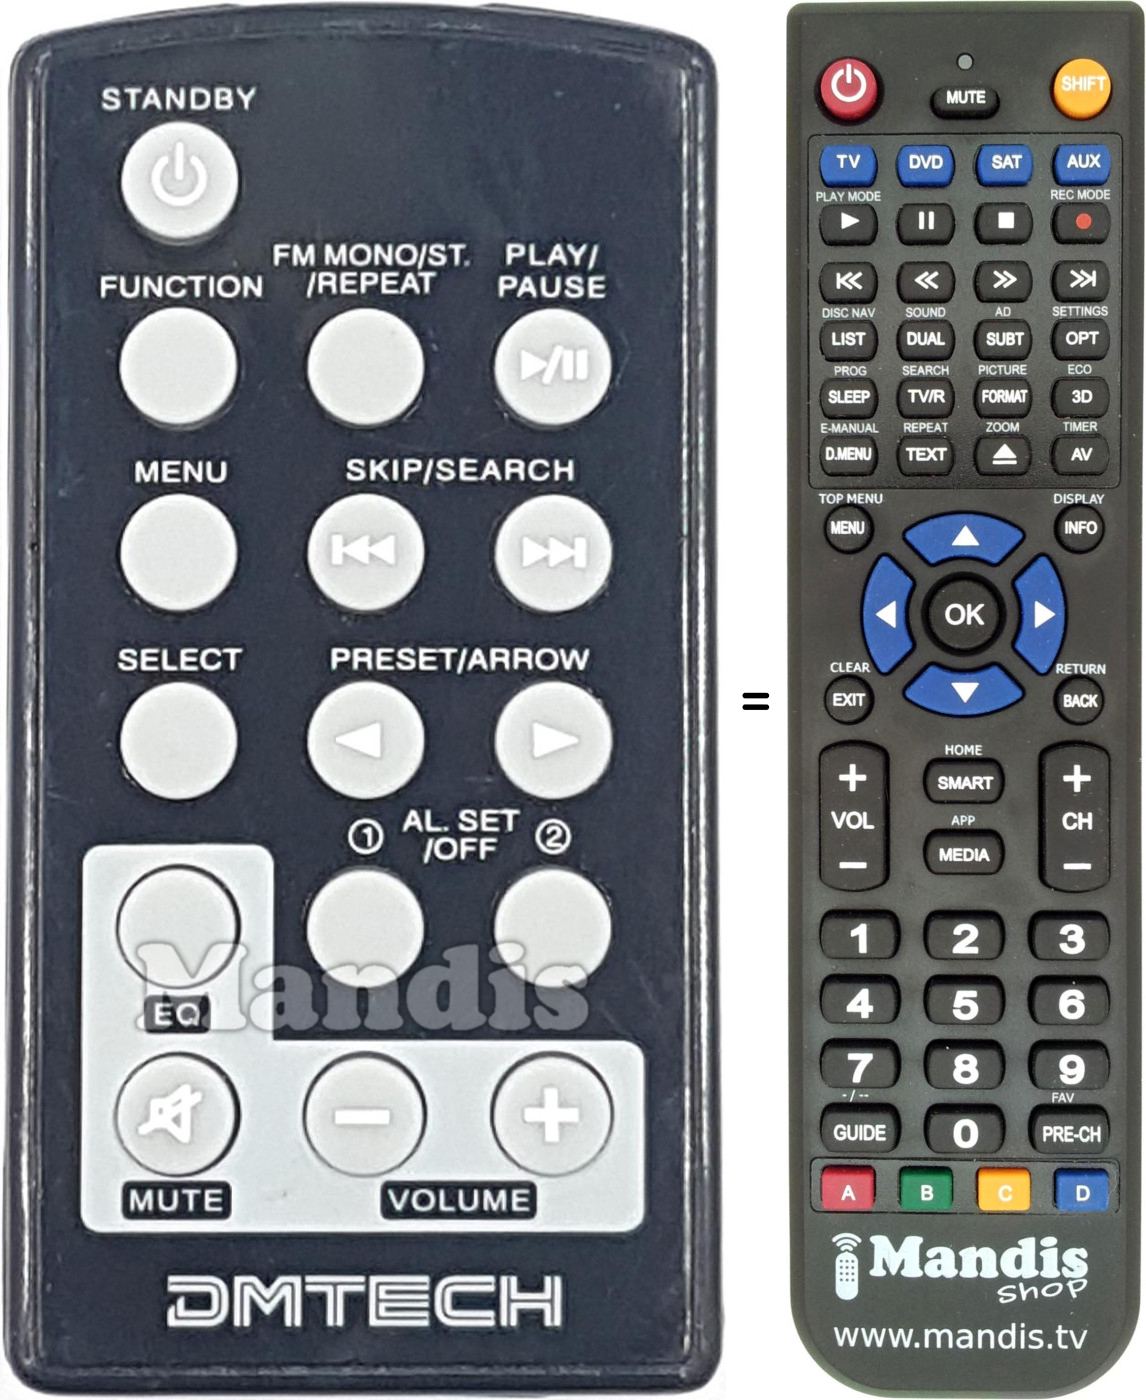 Replacement remote control REMCON1942